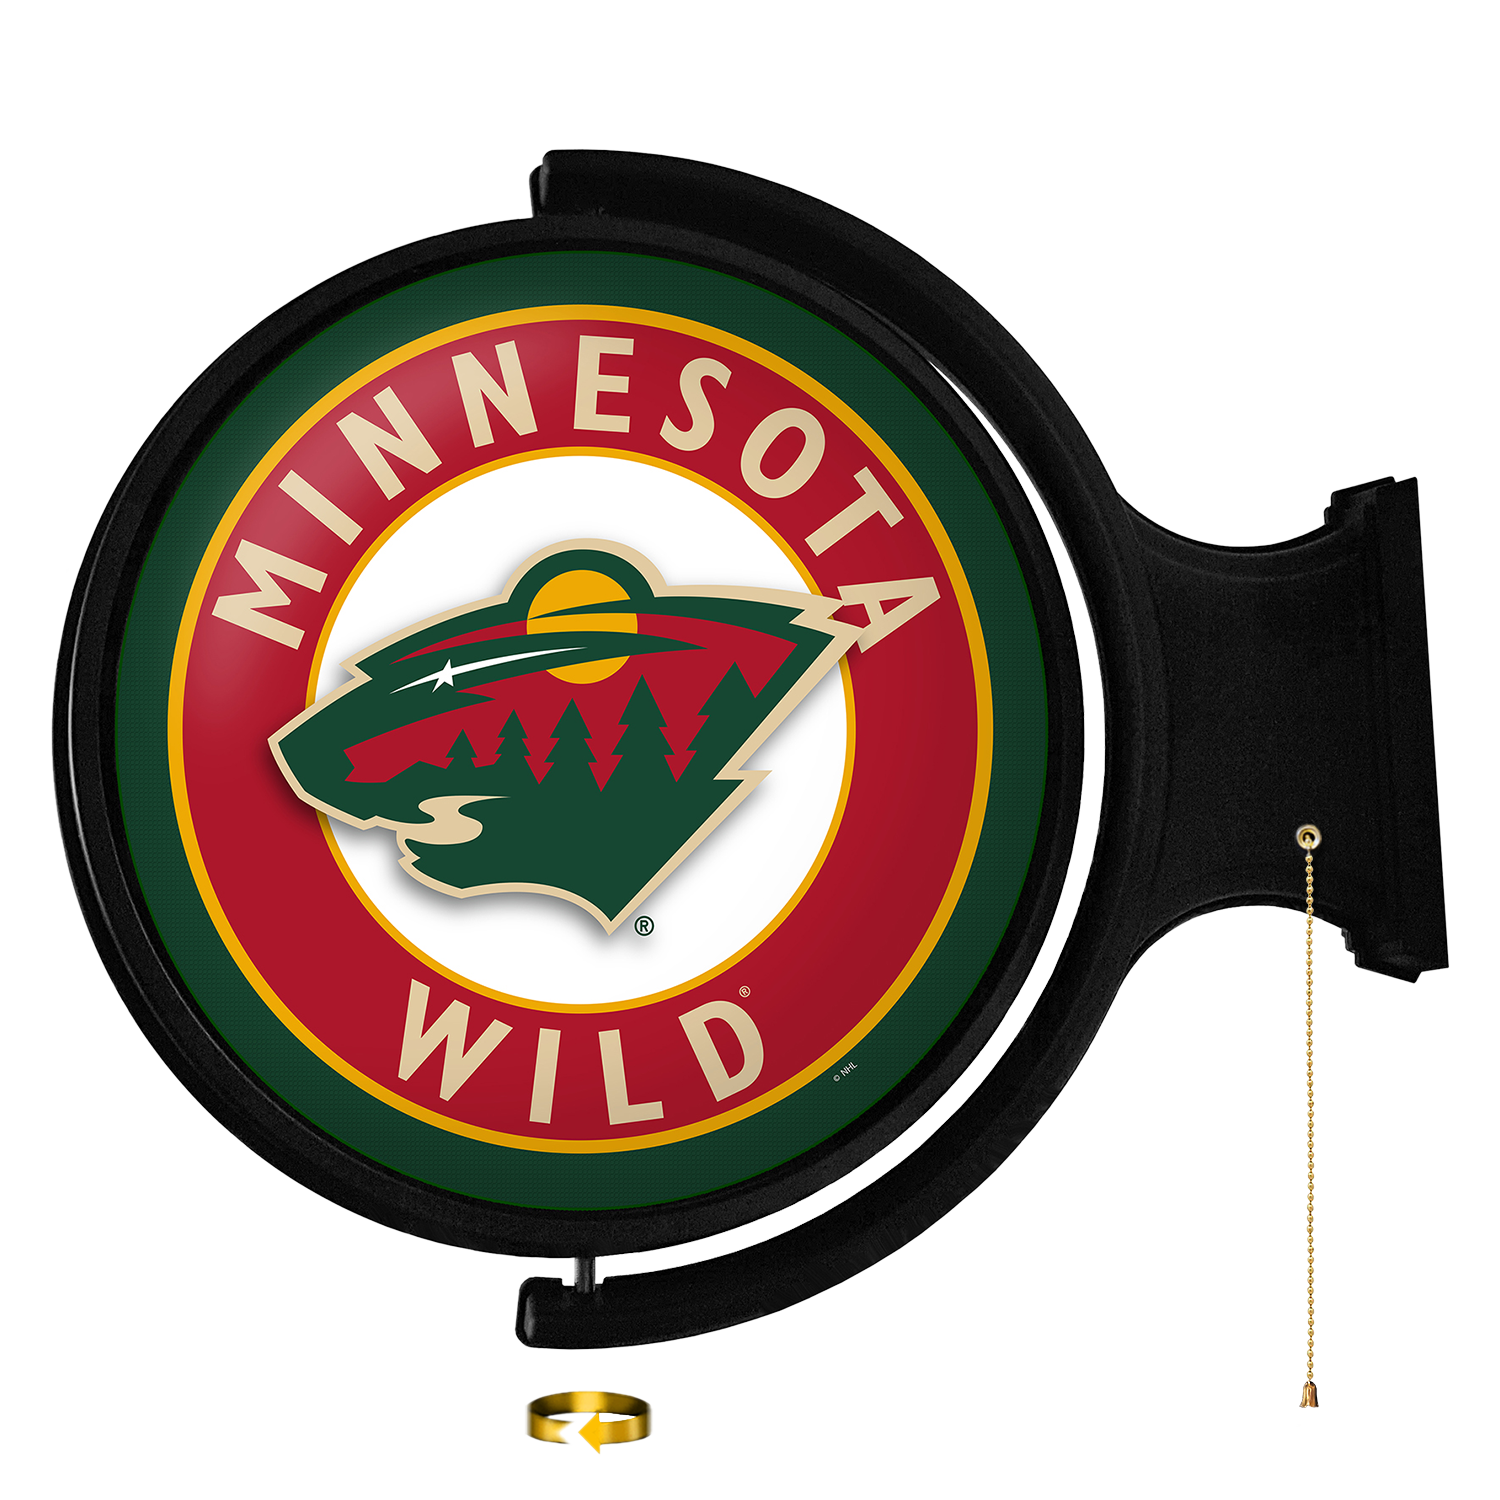 Minnesota Wild Round Rotating Wall Sign